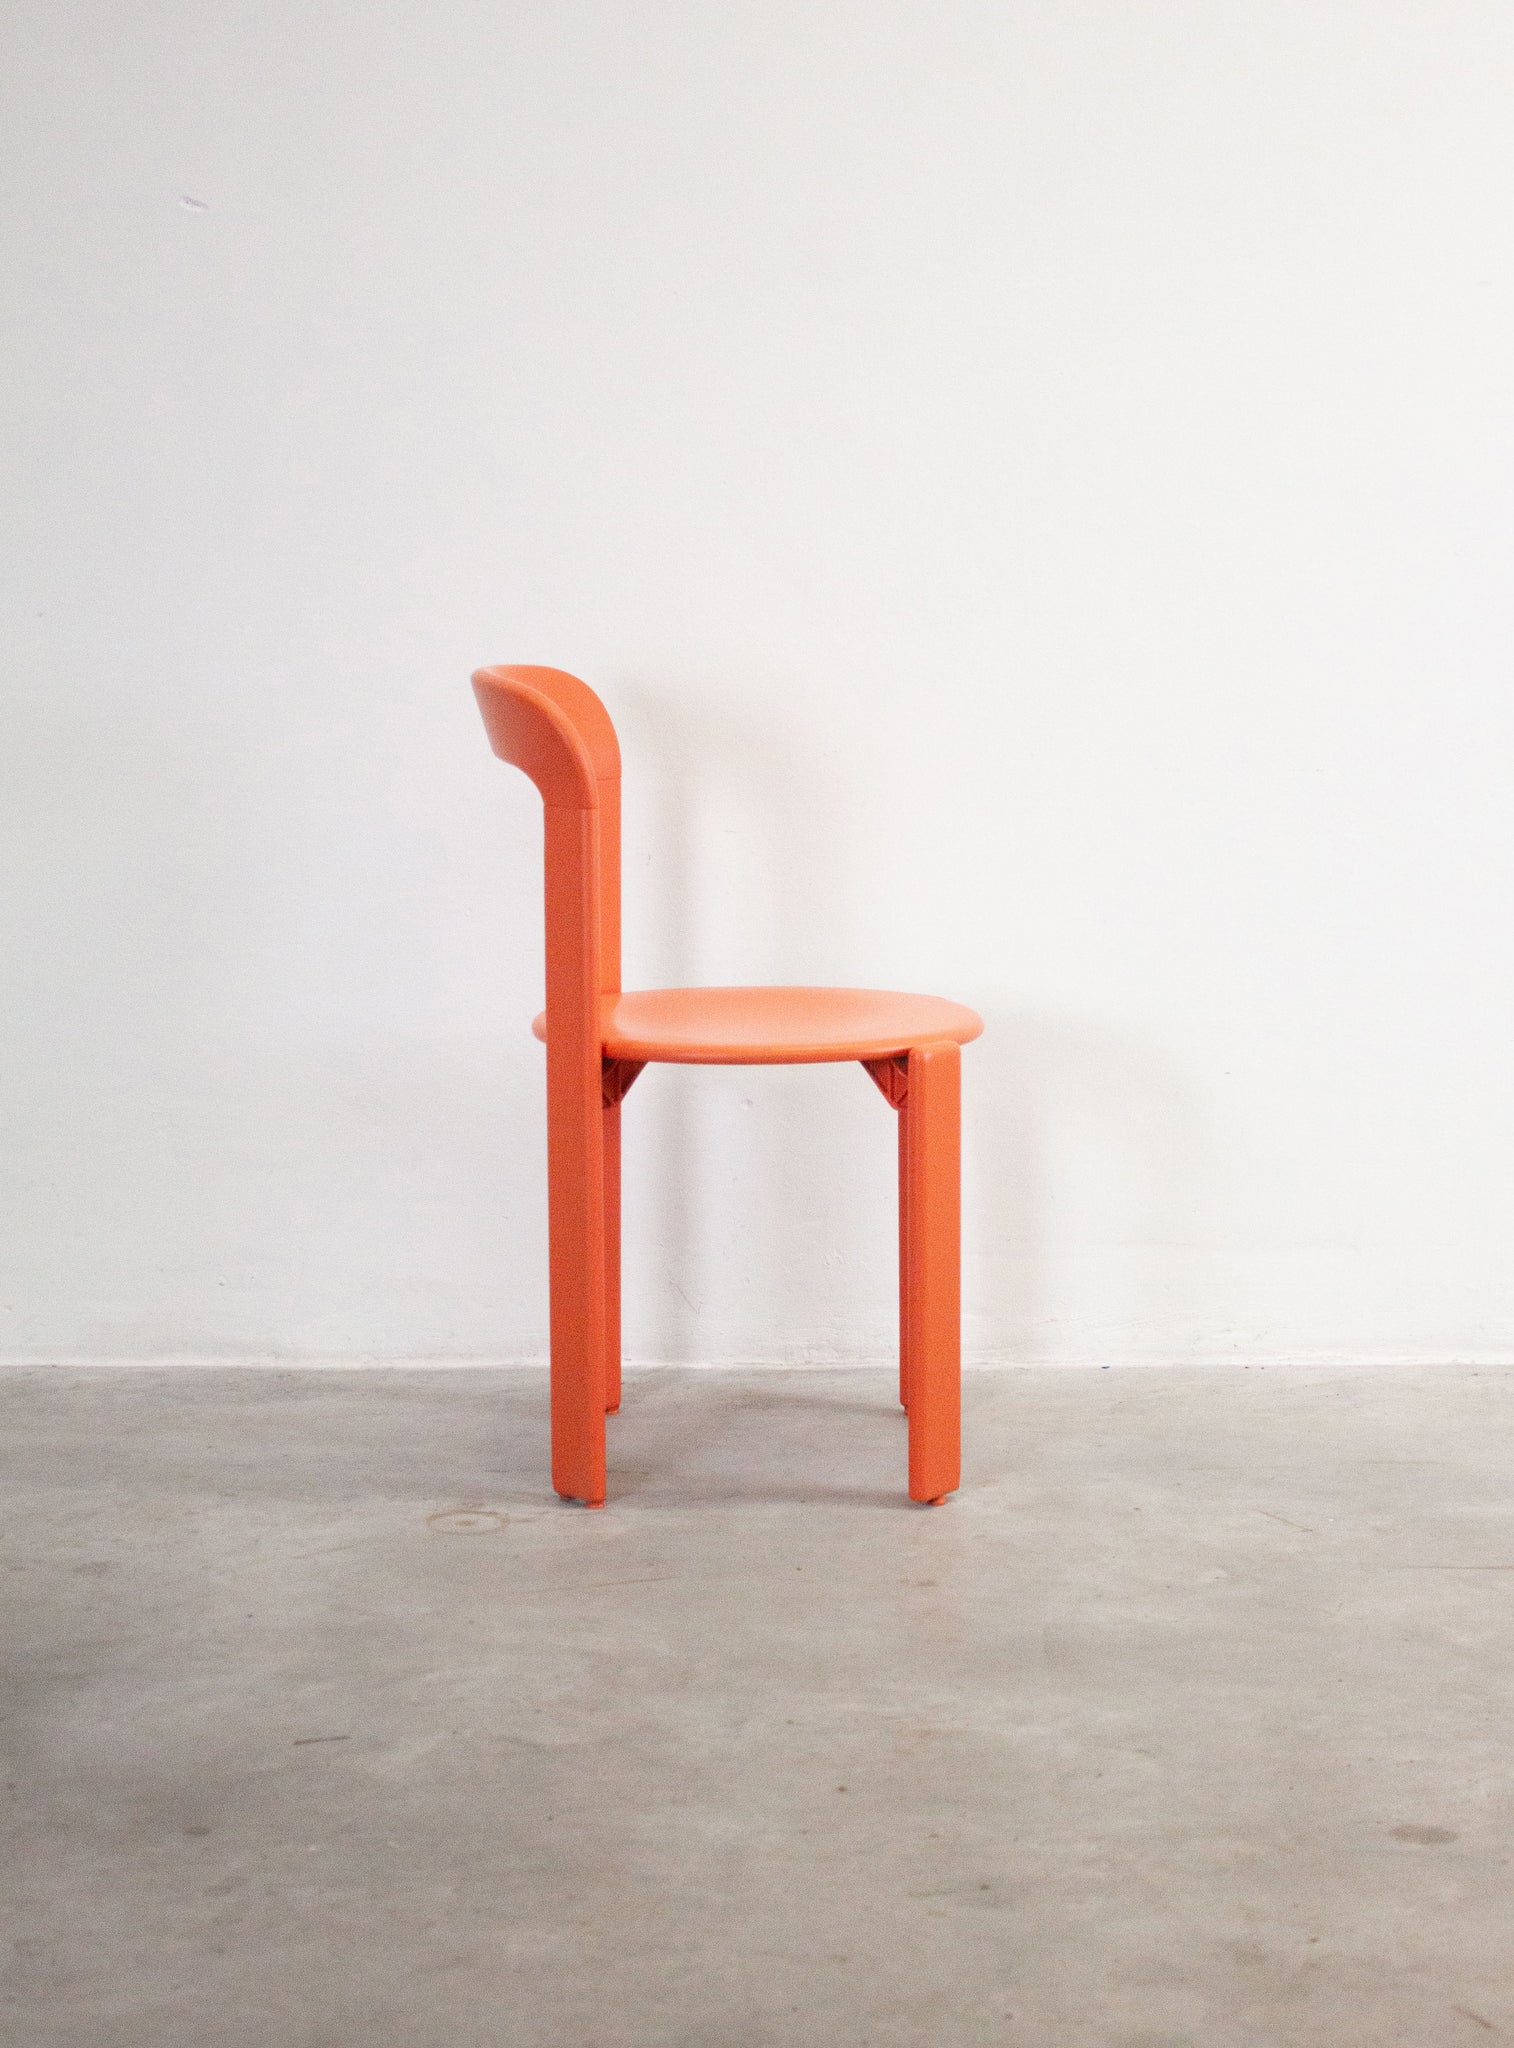 Dietiker Rey Dining Chairs by Bruno Rey (Coral)